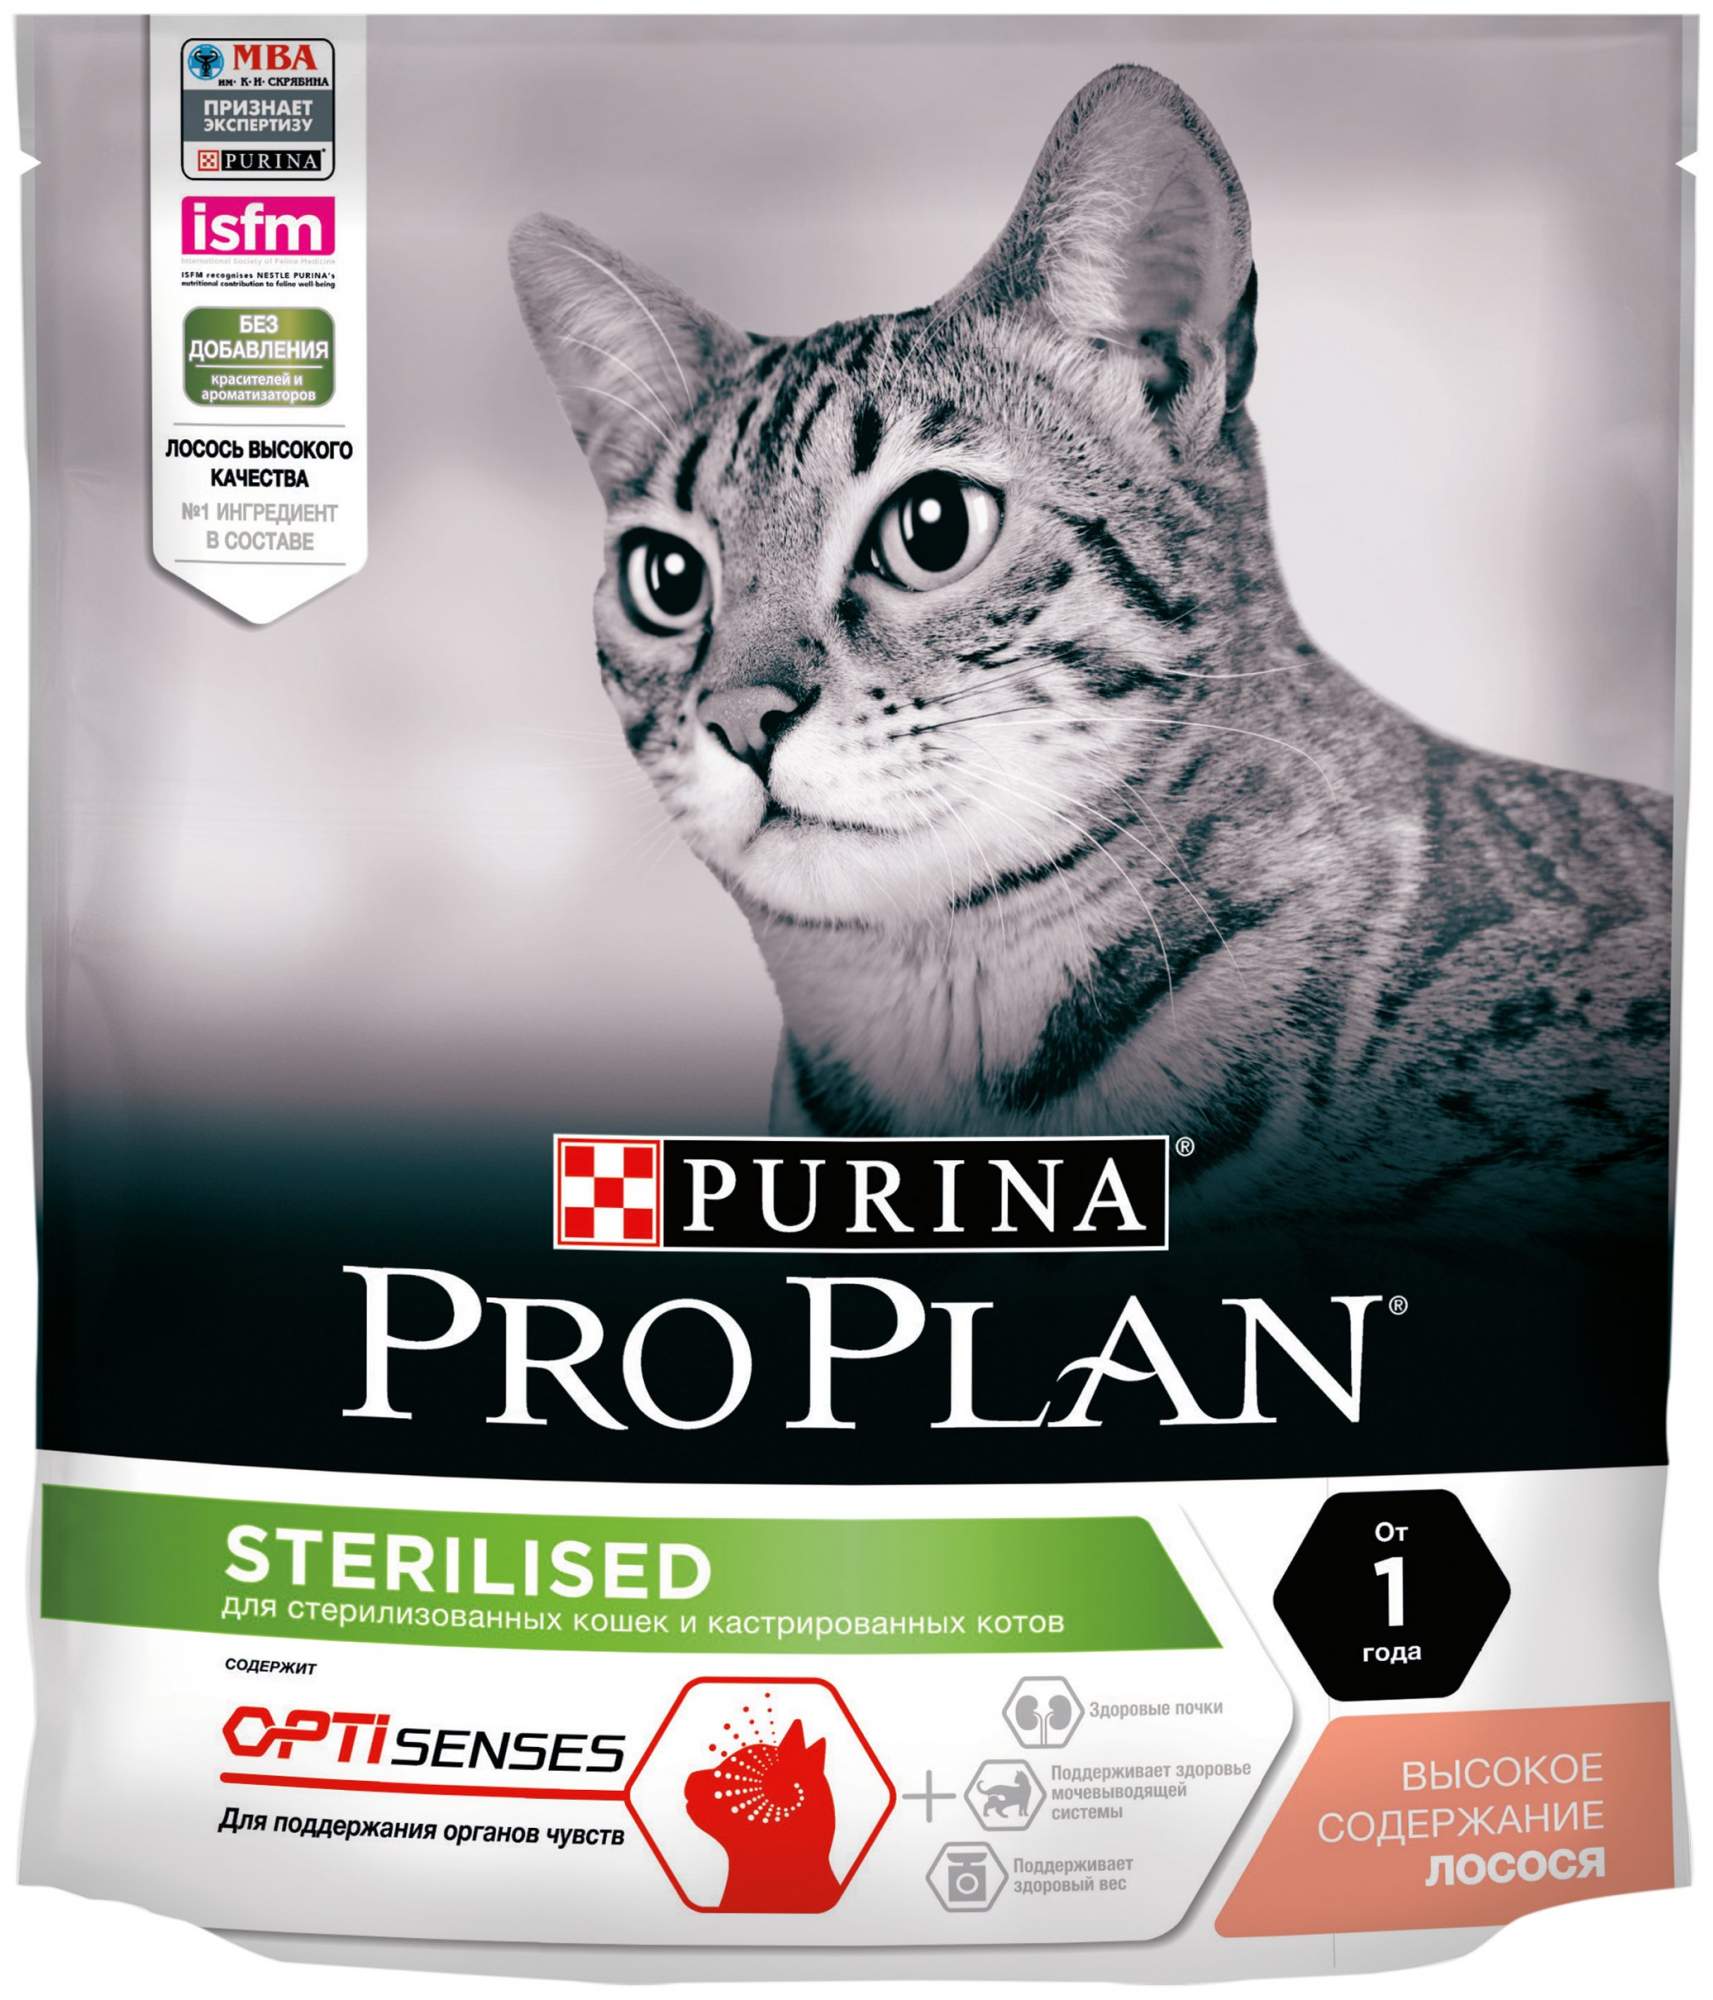 Купить сухой корм для кошек Pro Plan Optisenses Sterilised Salmon, лосось 2 шт по 0,4 кг, цены на Мегамаркет | Артикул: 100042769390